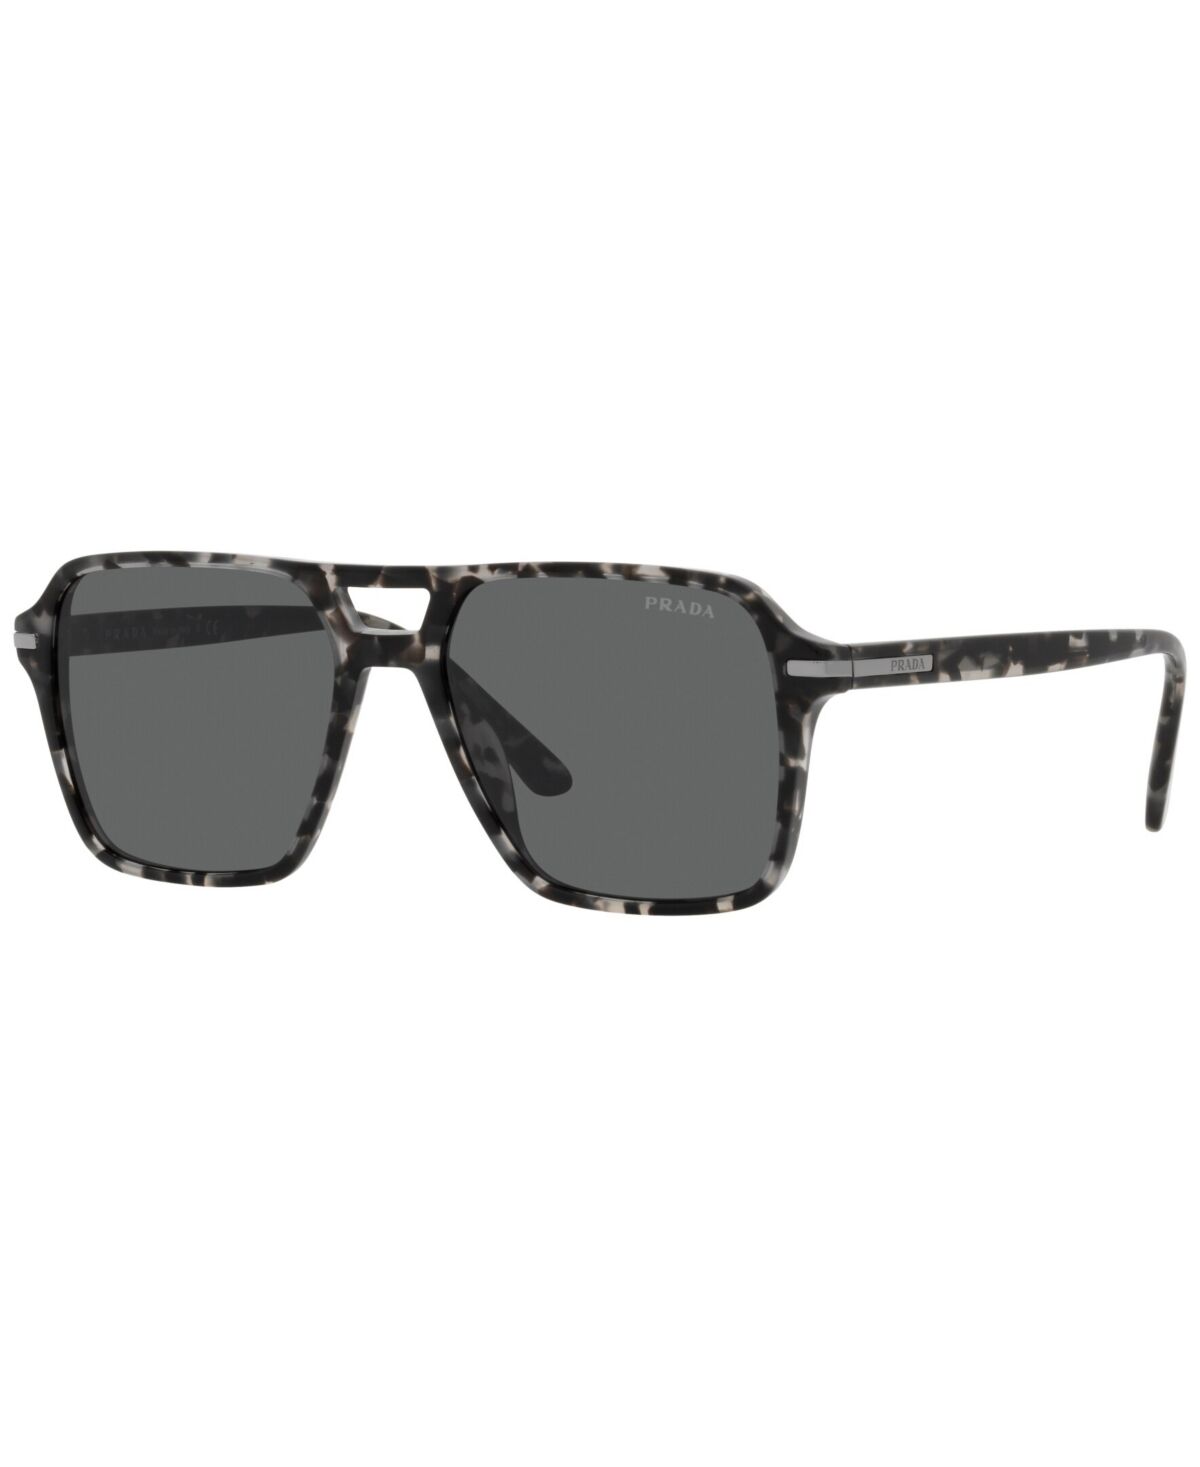 Prada Men's Sunglasses, Pr 20YS - Black Havana